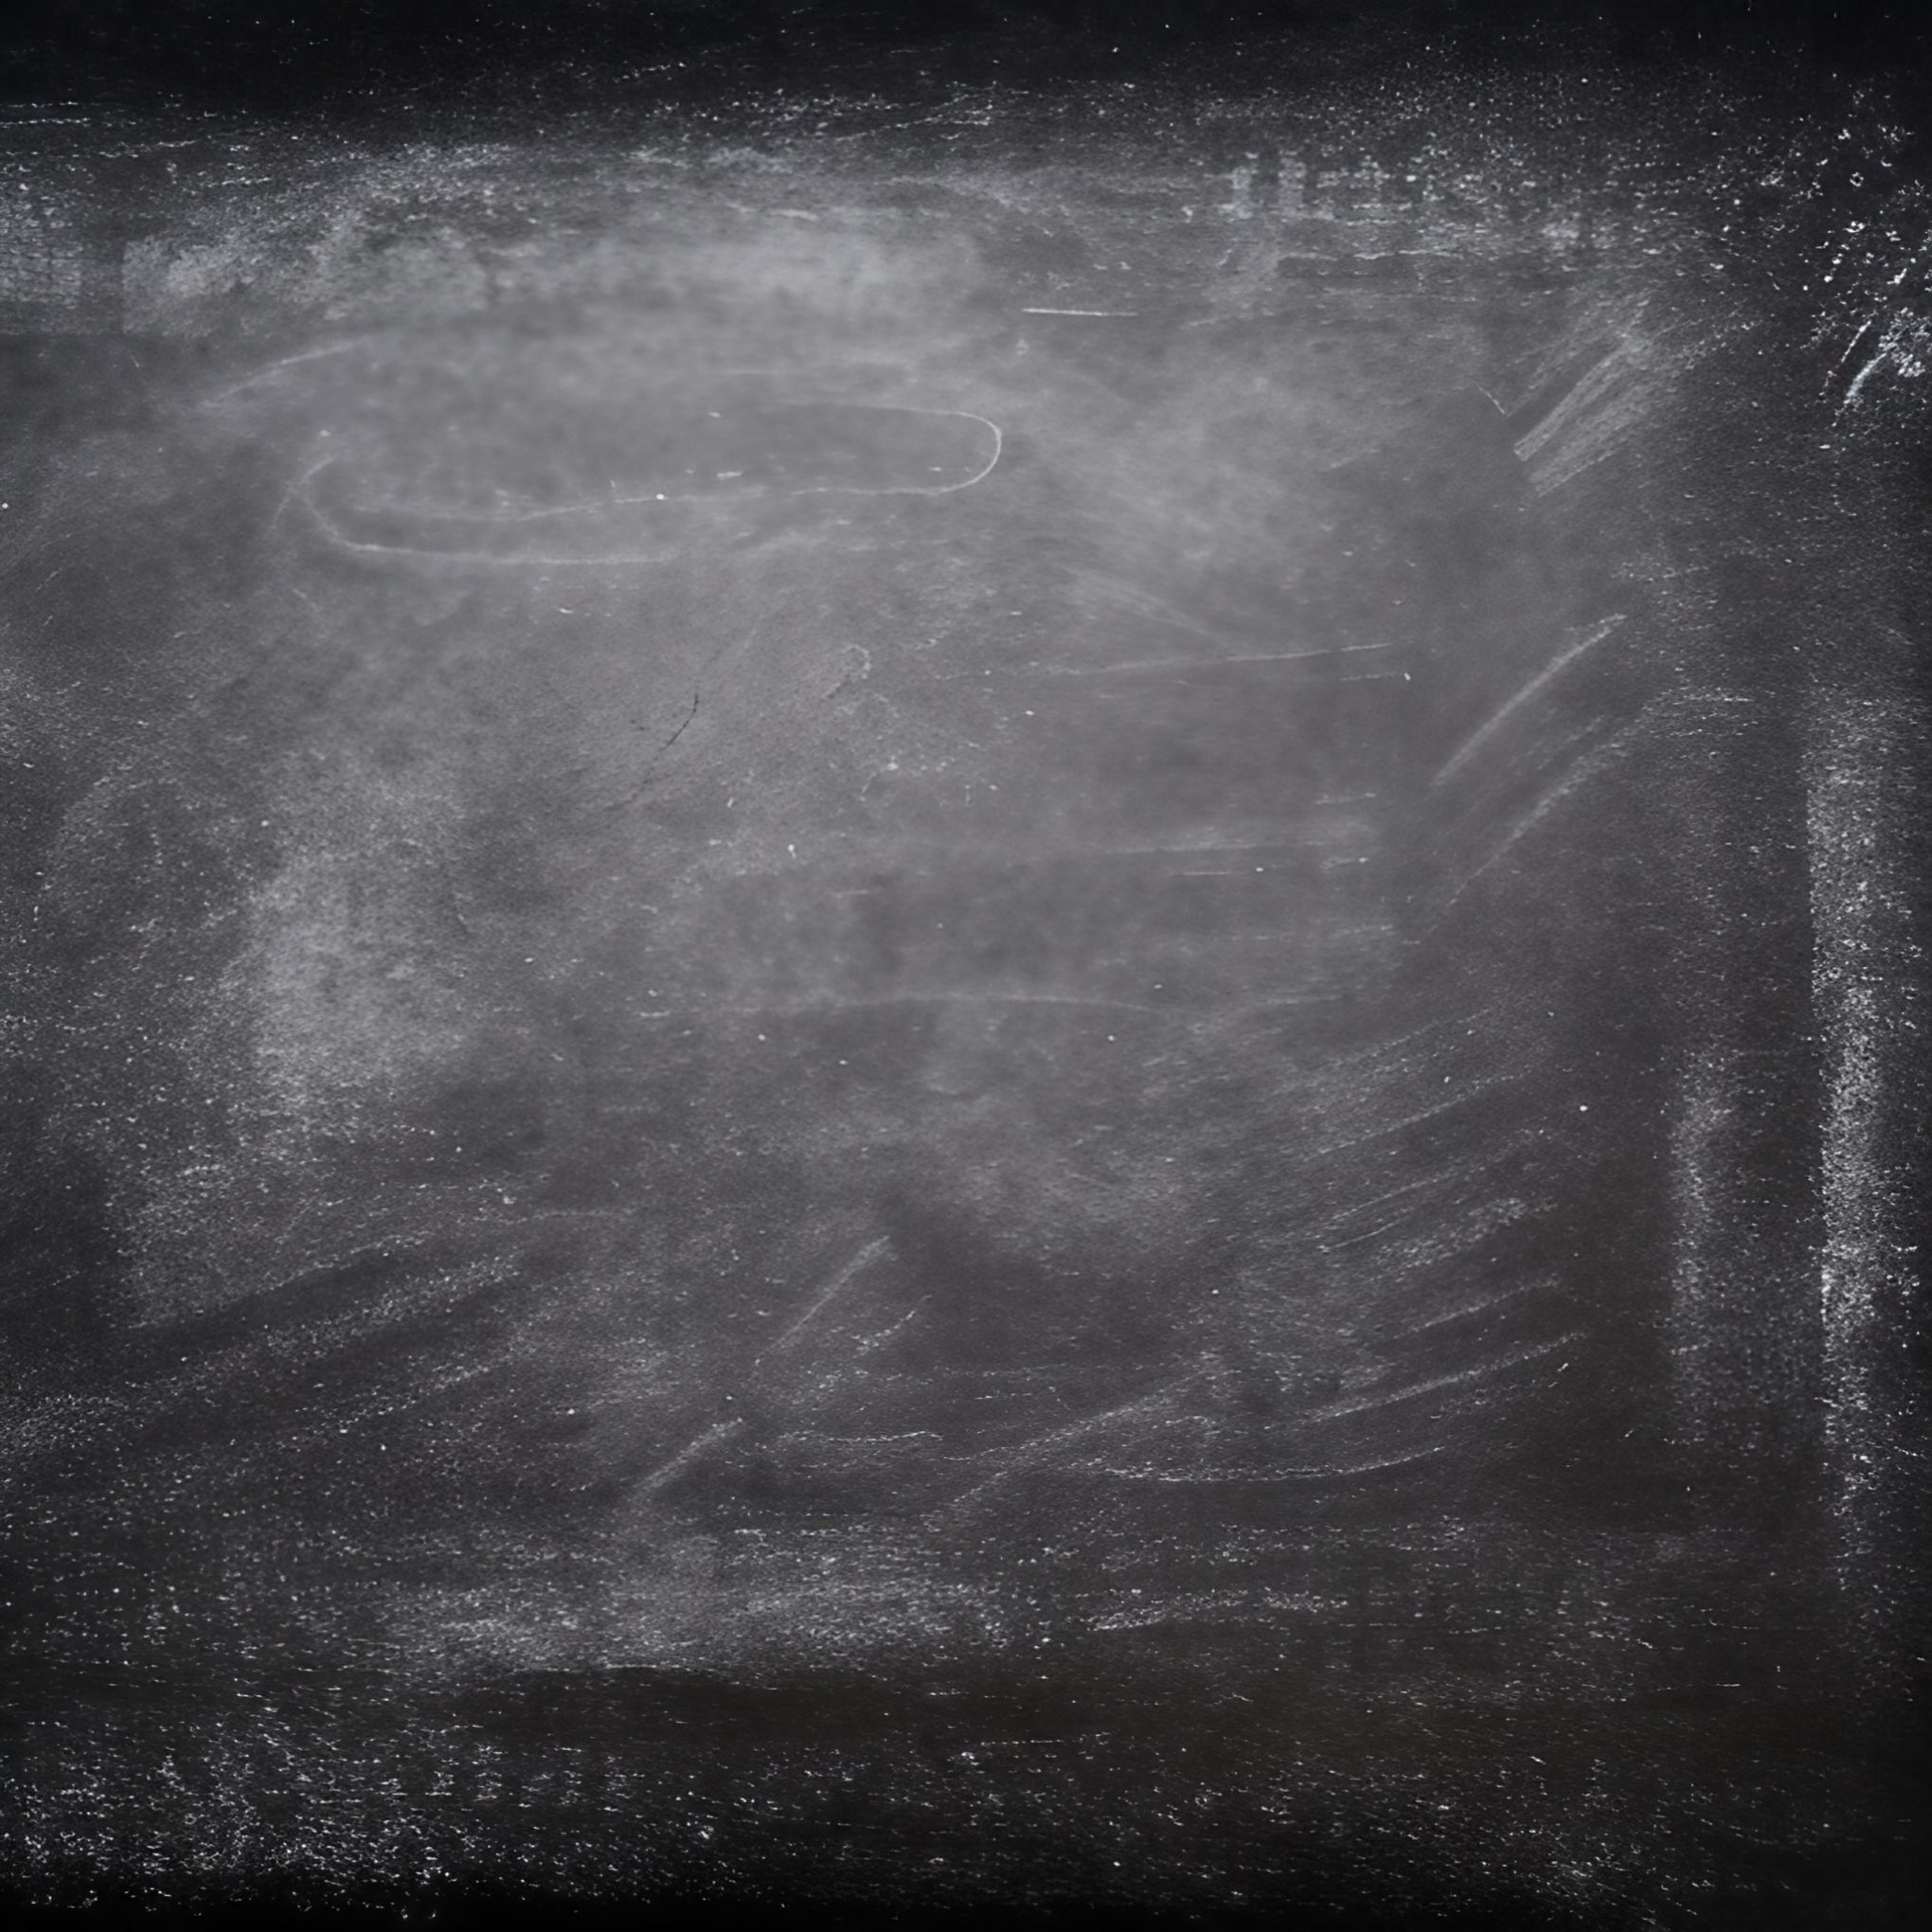 Dusty School Chalkboard Background Texture Free Stock Image